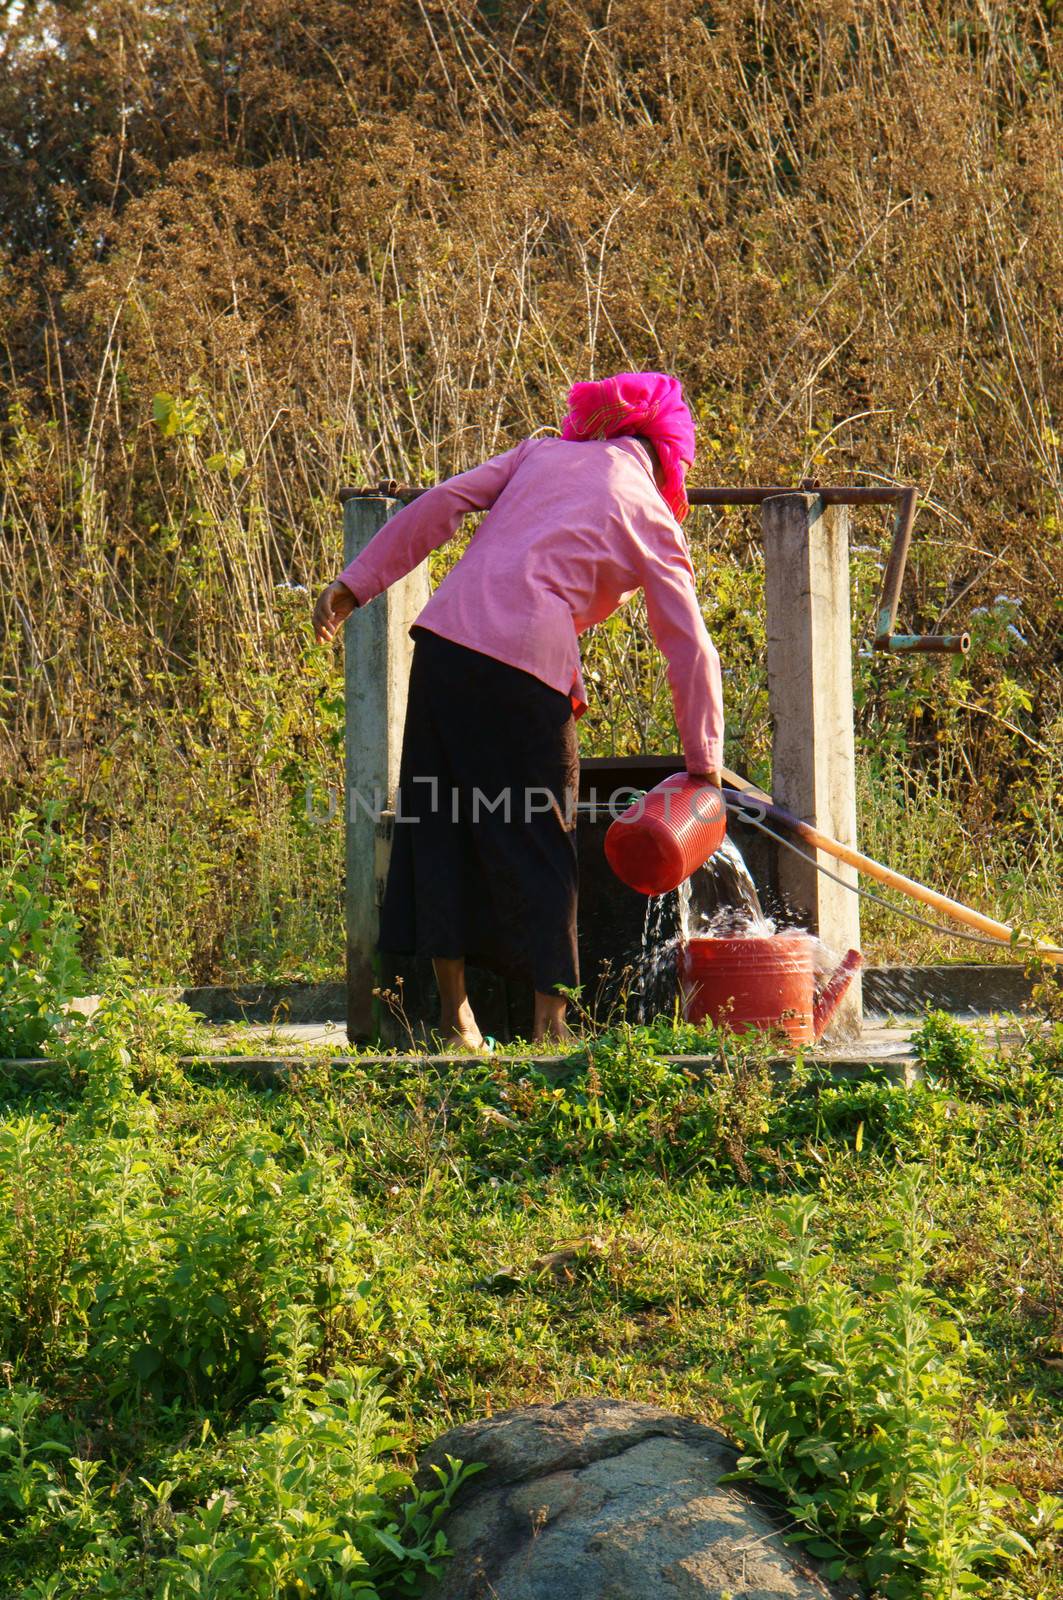  DAKLAK, VIETNAM- FEB 6: People  scoop water from water well by bucker, woman wear colorful clothing, the well at meadow in Vietnamese countryside, Viet Nam, Feb 6, 2014  